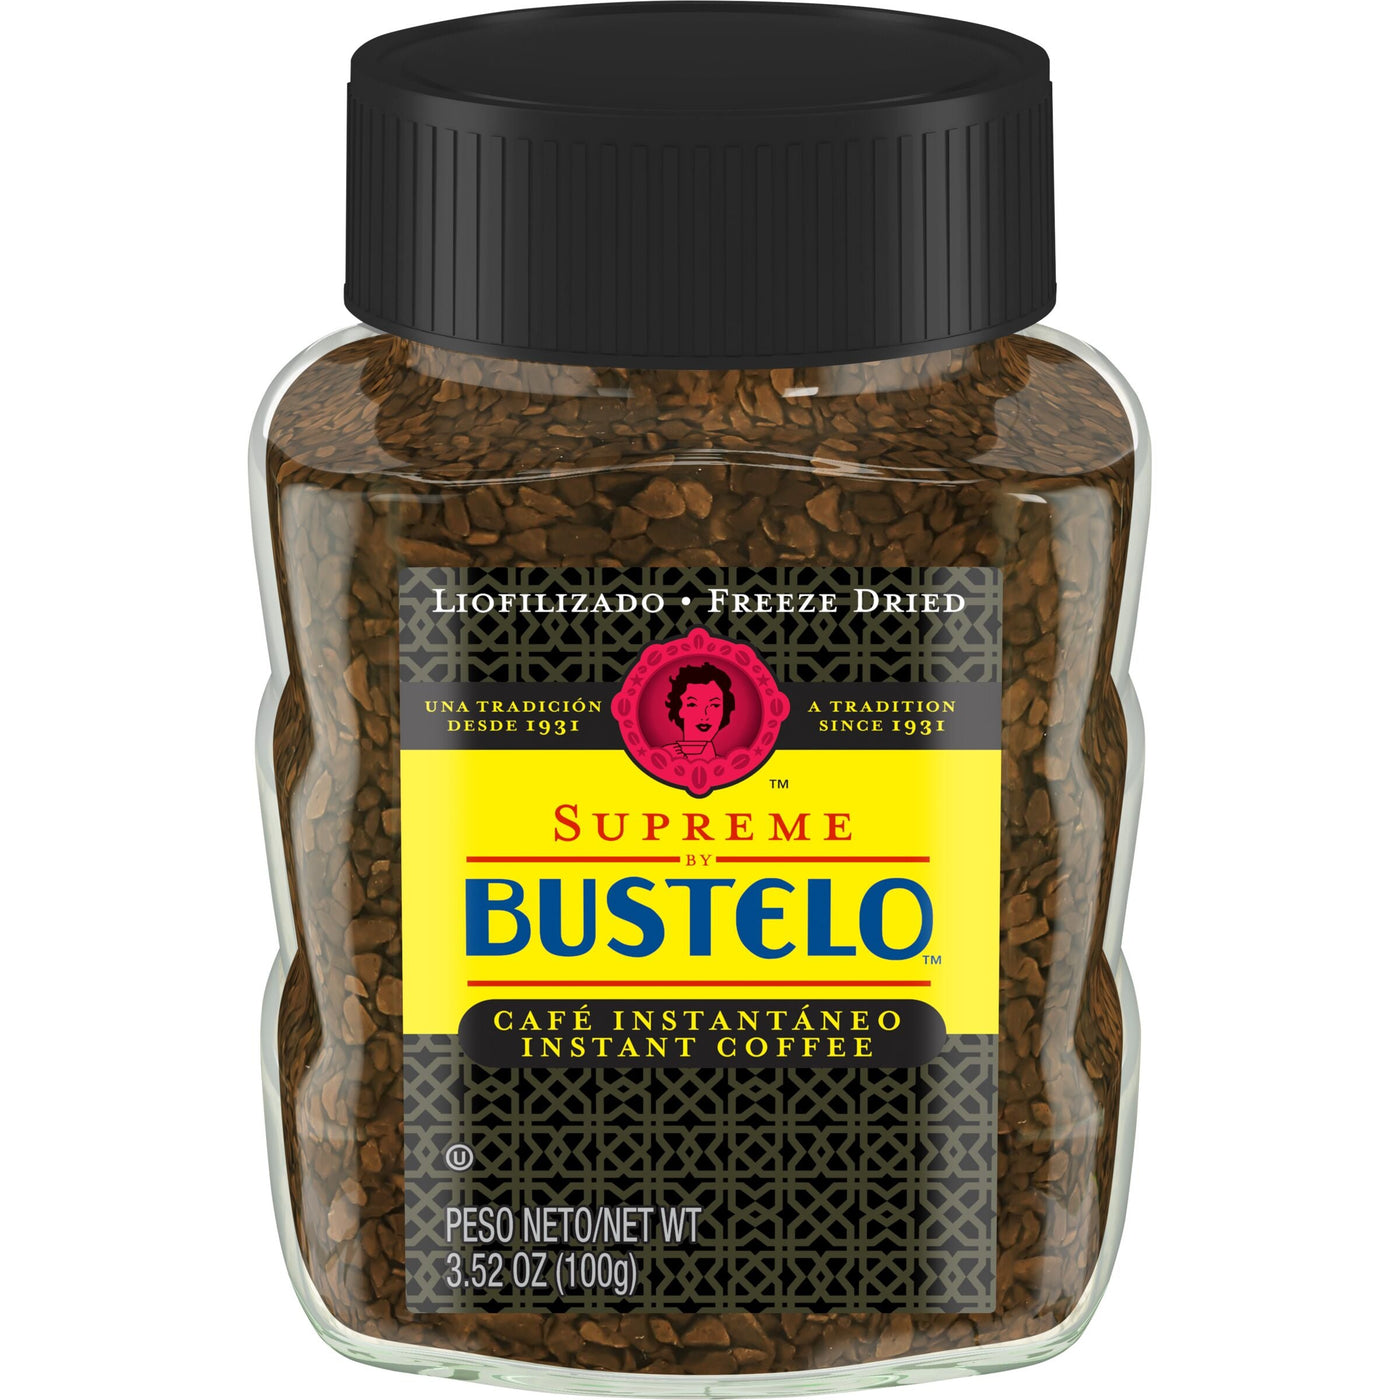 Supreme by Bustelo, Freeze-Dried Instant Coffee, 3.52 oz